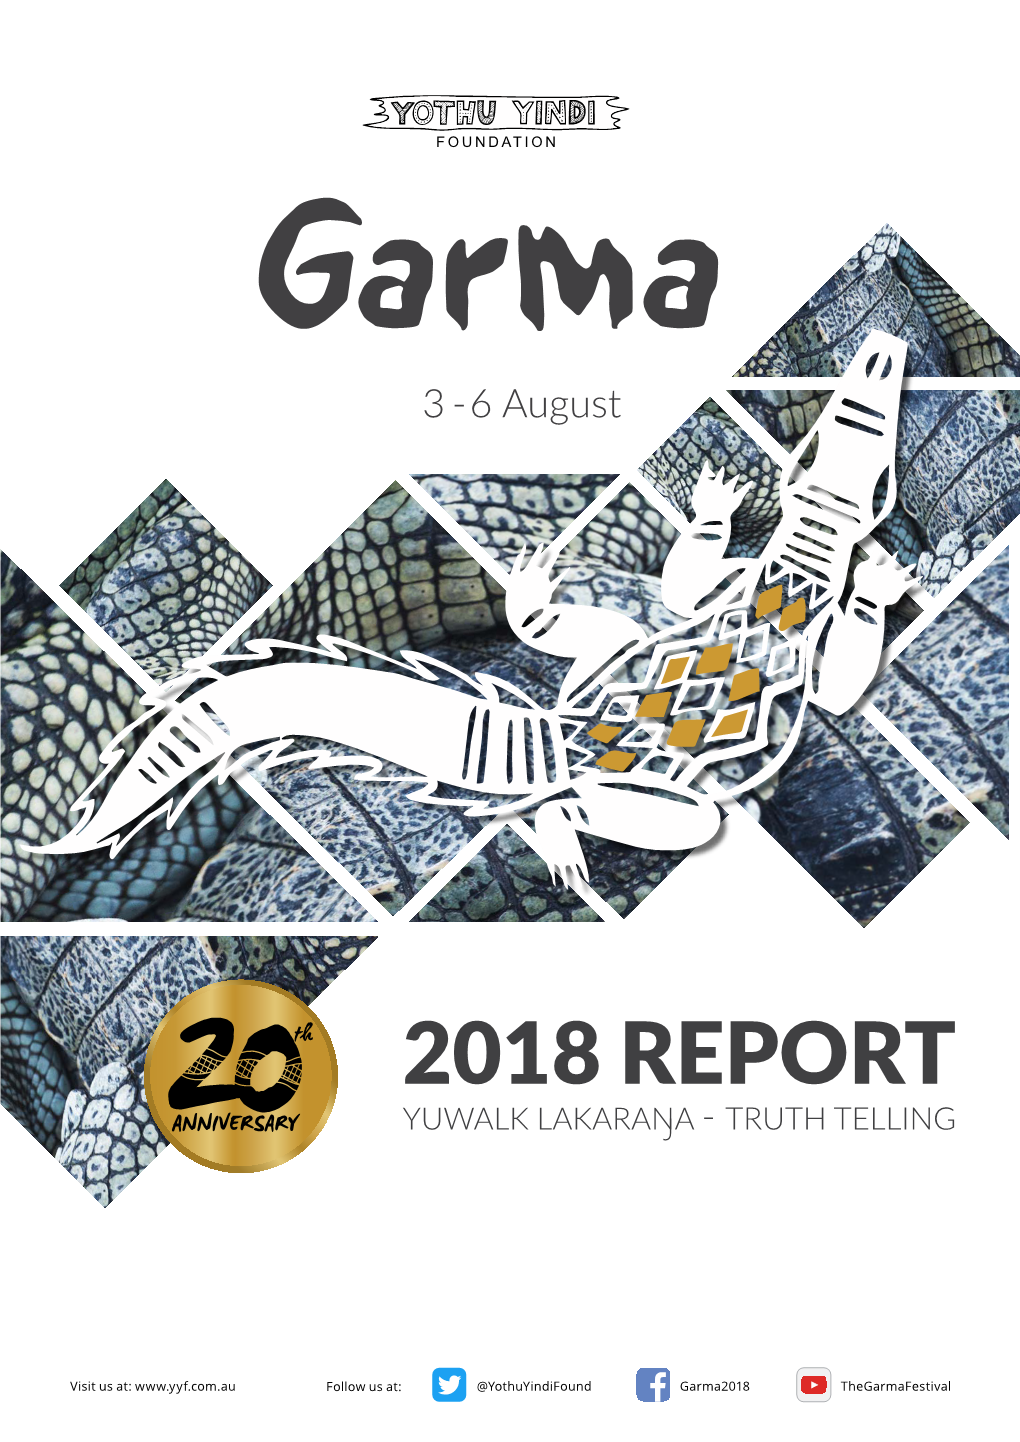 2018 Report Yuwalk Lakarana - Truth Telling